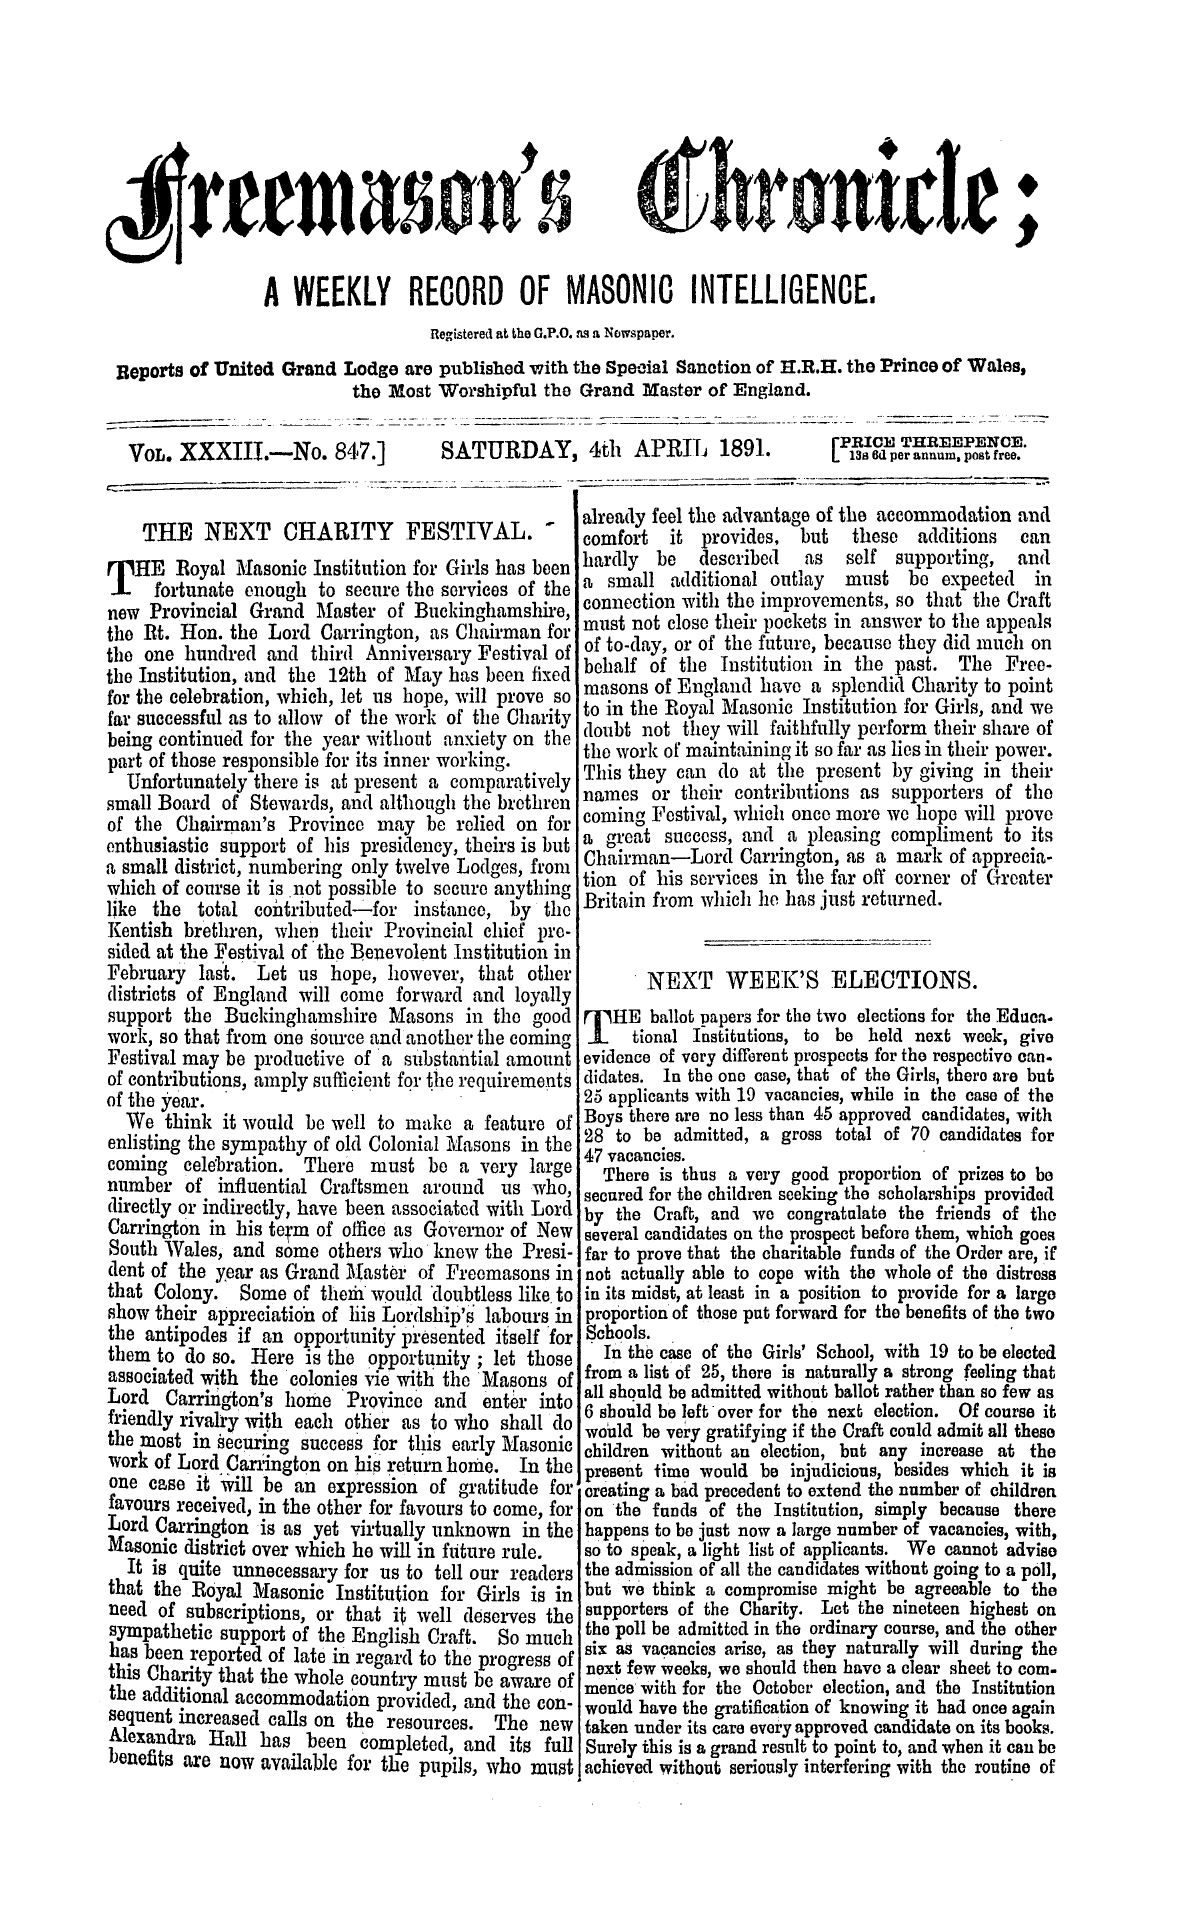 The Freemason's Chronicle: 1891-04-04 - Next Week's Elections.